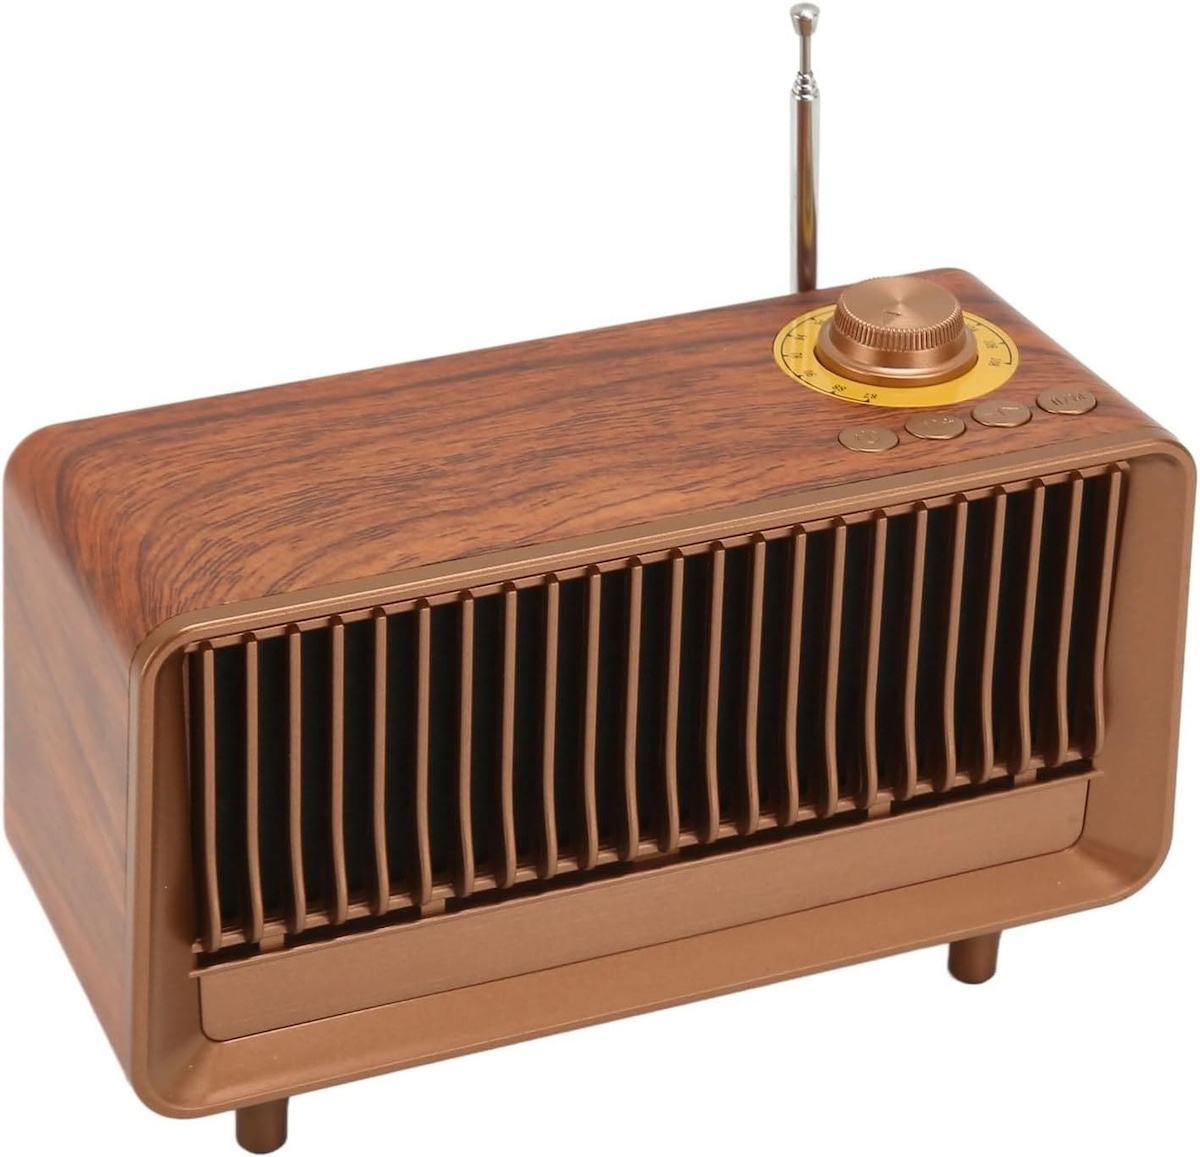 Bluetooth radio retro vintage style made of wood